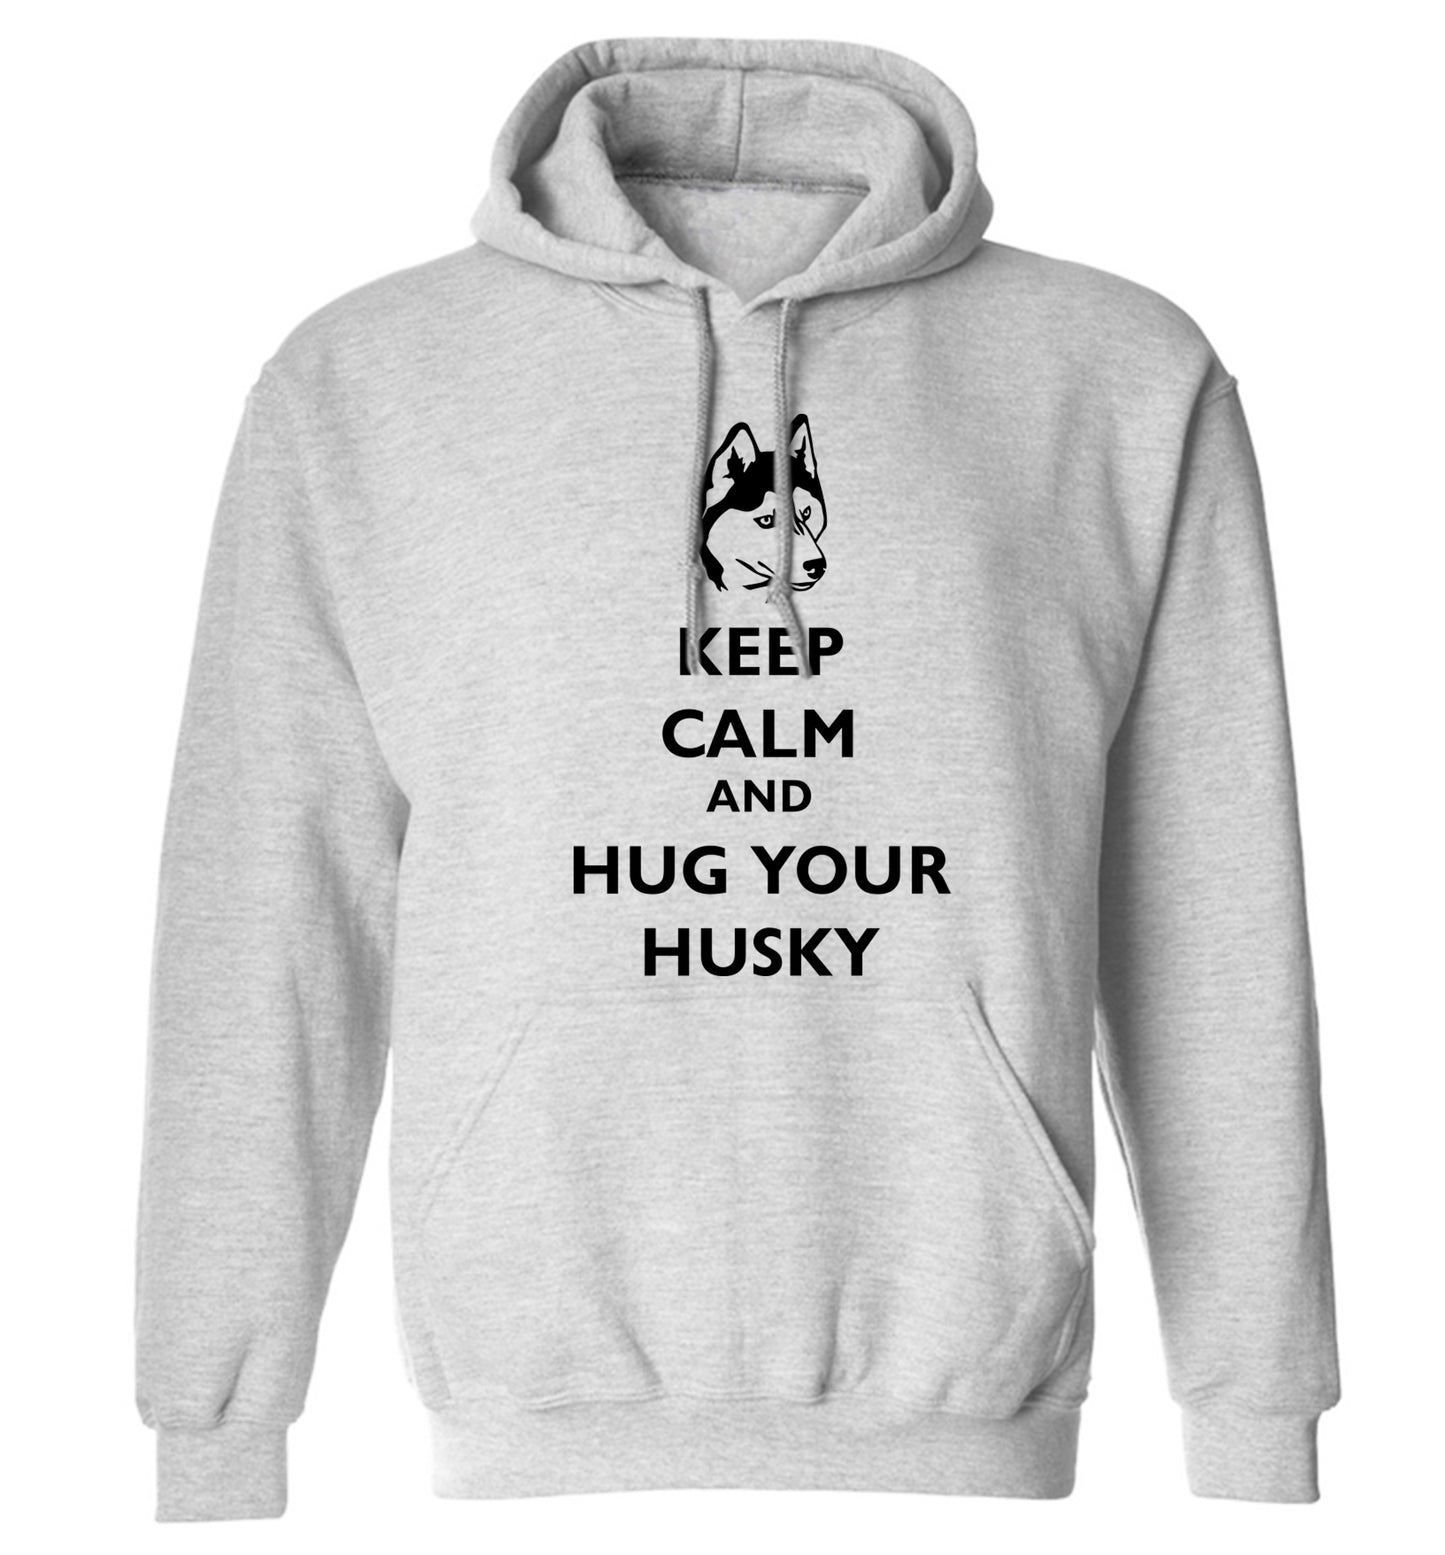 Keep calm and hug your husky adults unisex grey hoodie 2XL